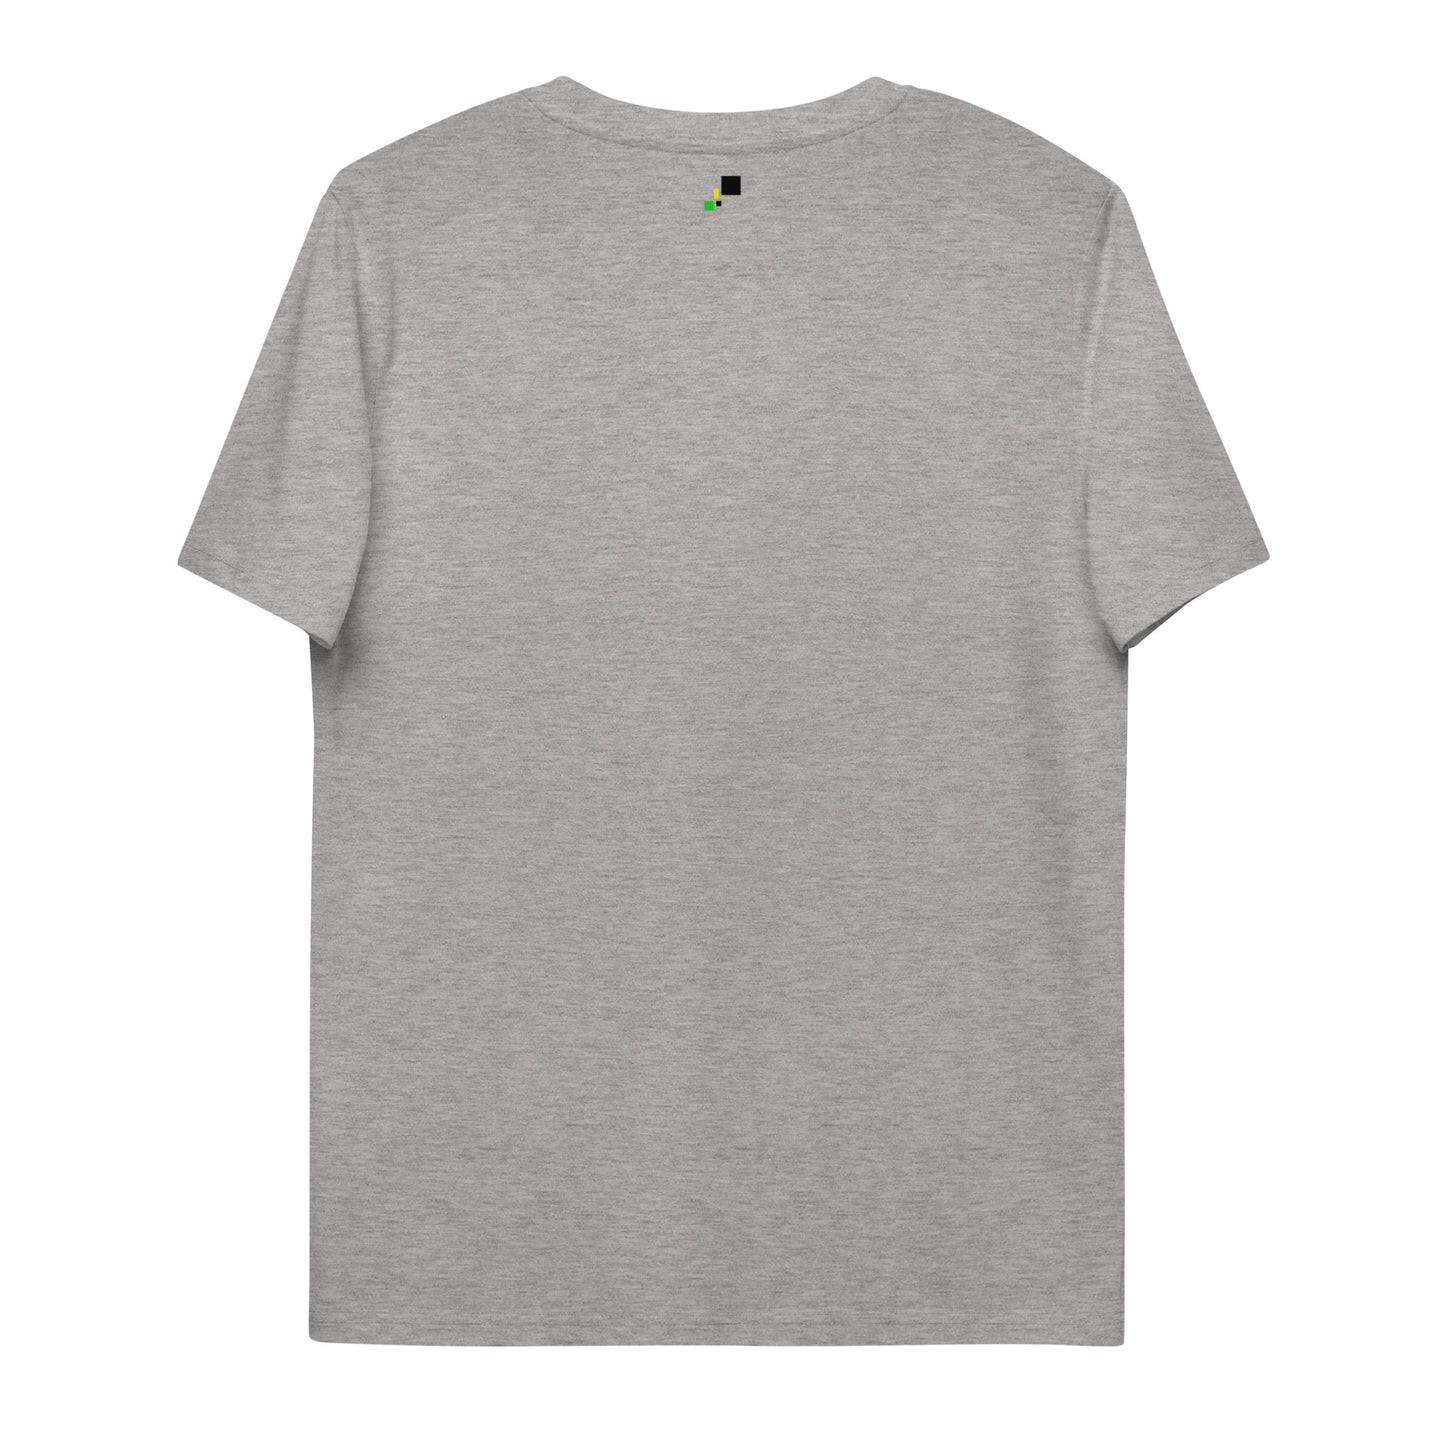 Be first low profile - Camiseta de algodón orgánico unisex